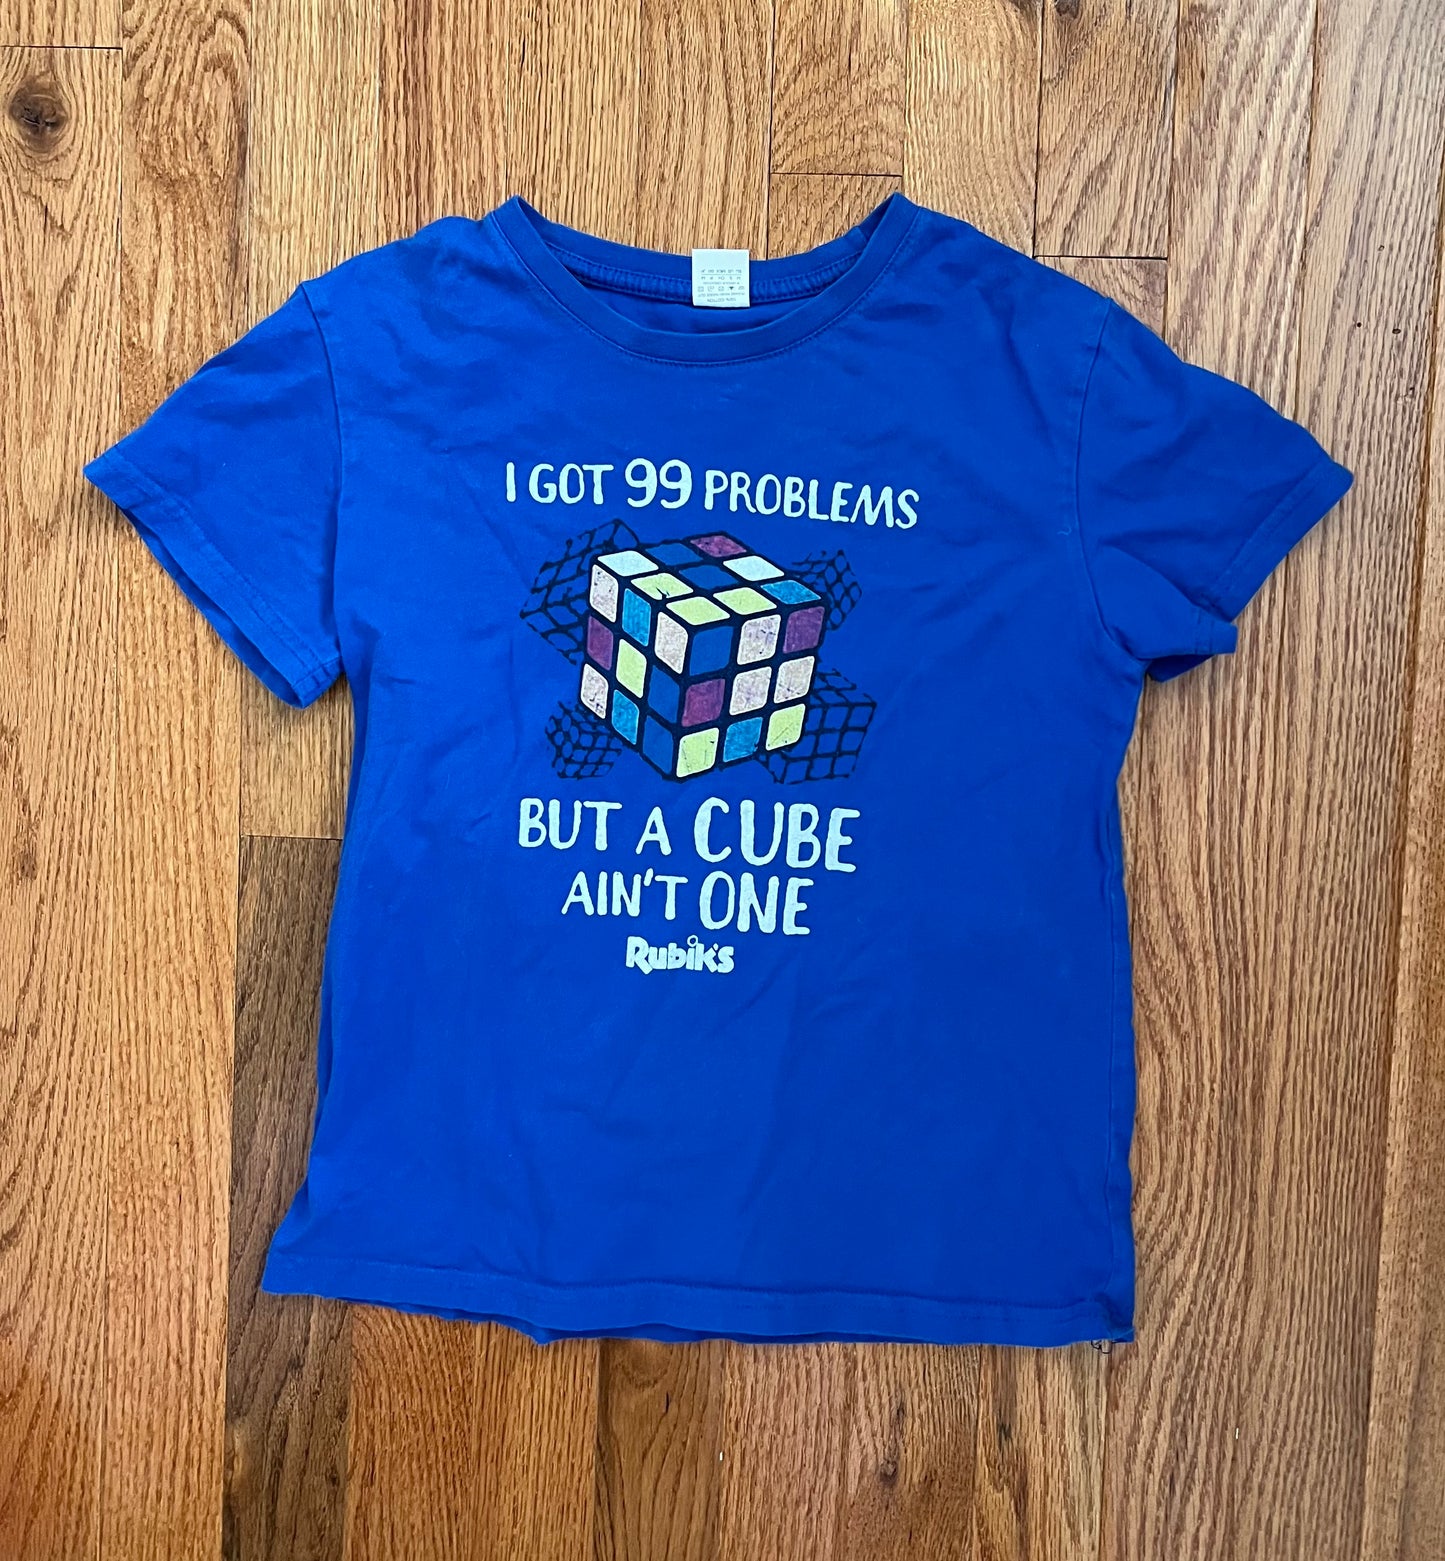 Rubik’s Cube tshirt - size small (boys or girls)